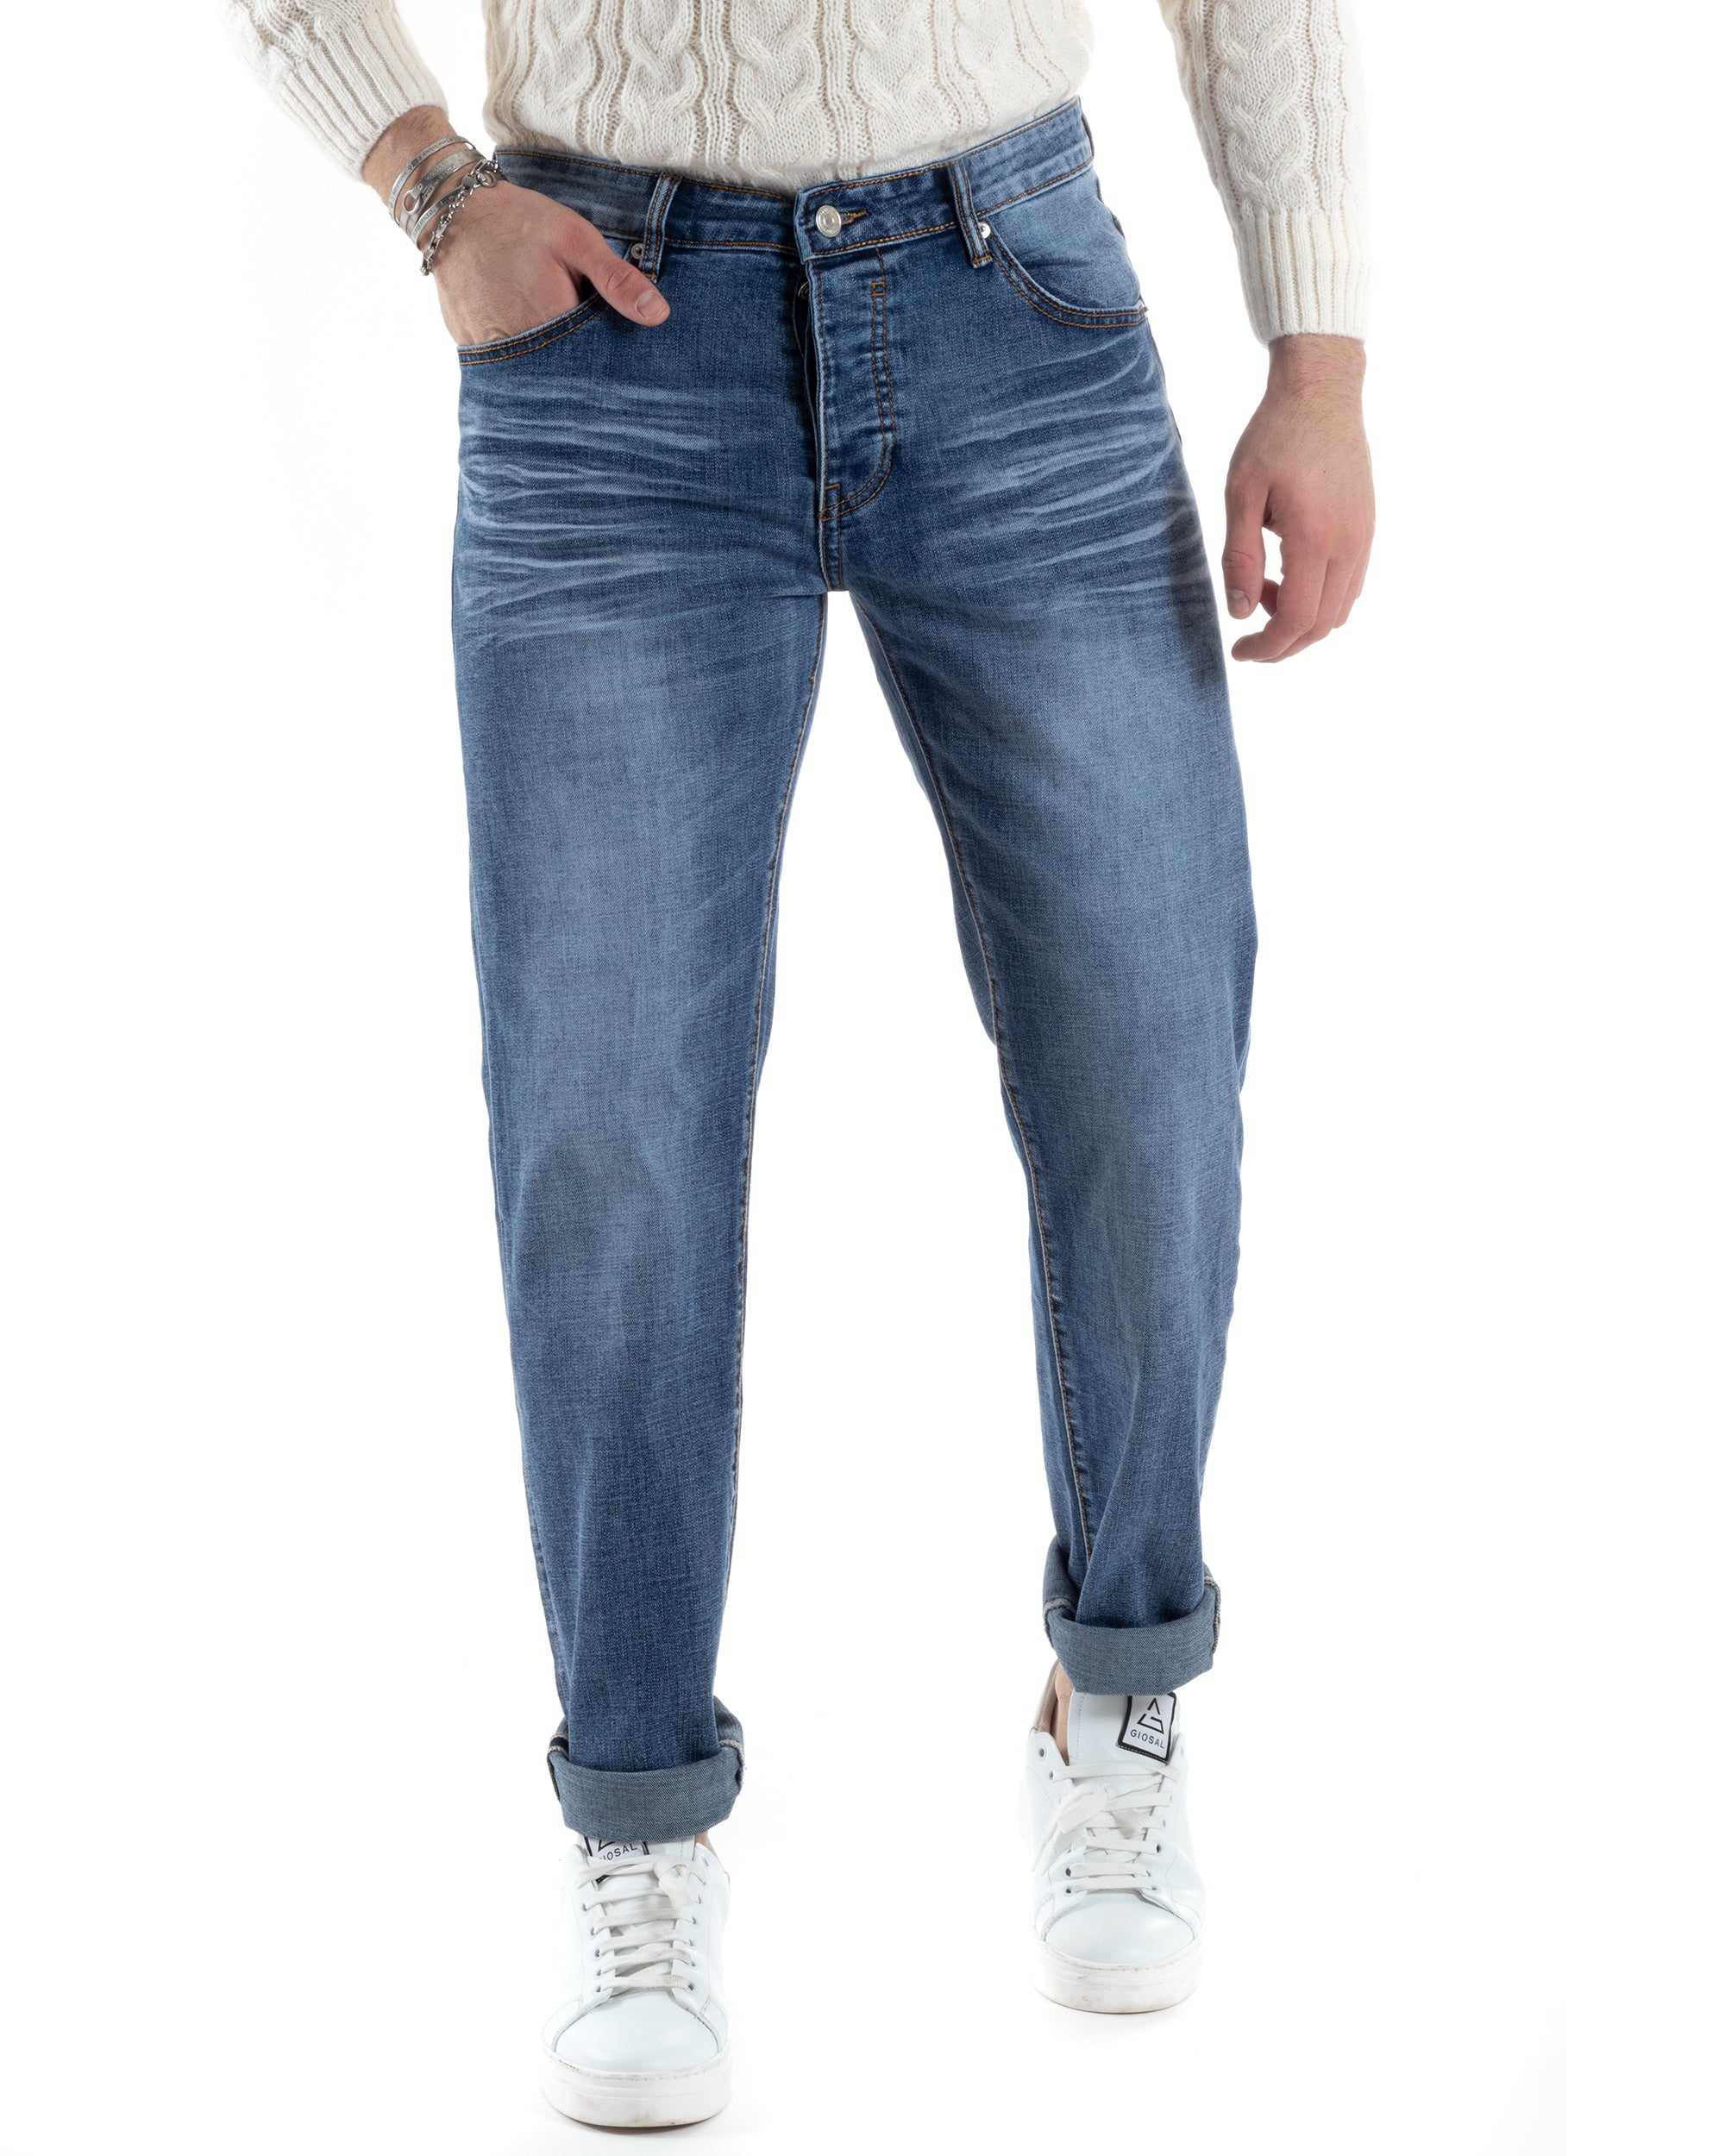 Pantaloni Uomo Jeans Cinque Tasche Slim Fit Basic Blu Denim Stone Washed GIOSAL-JS1006A